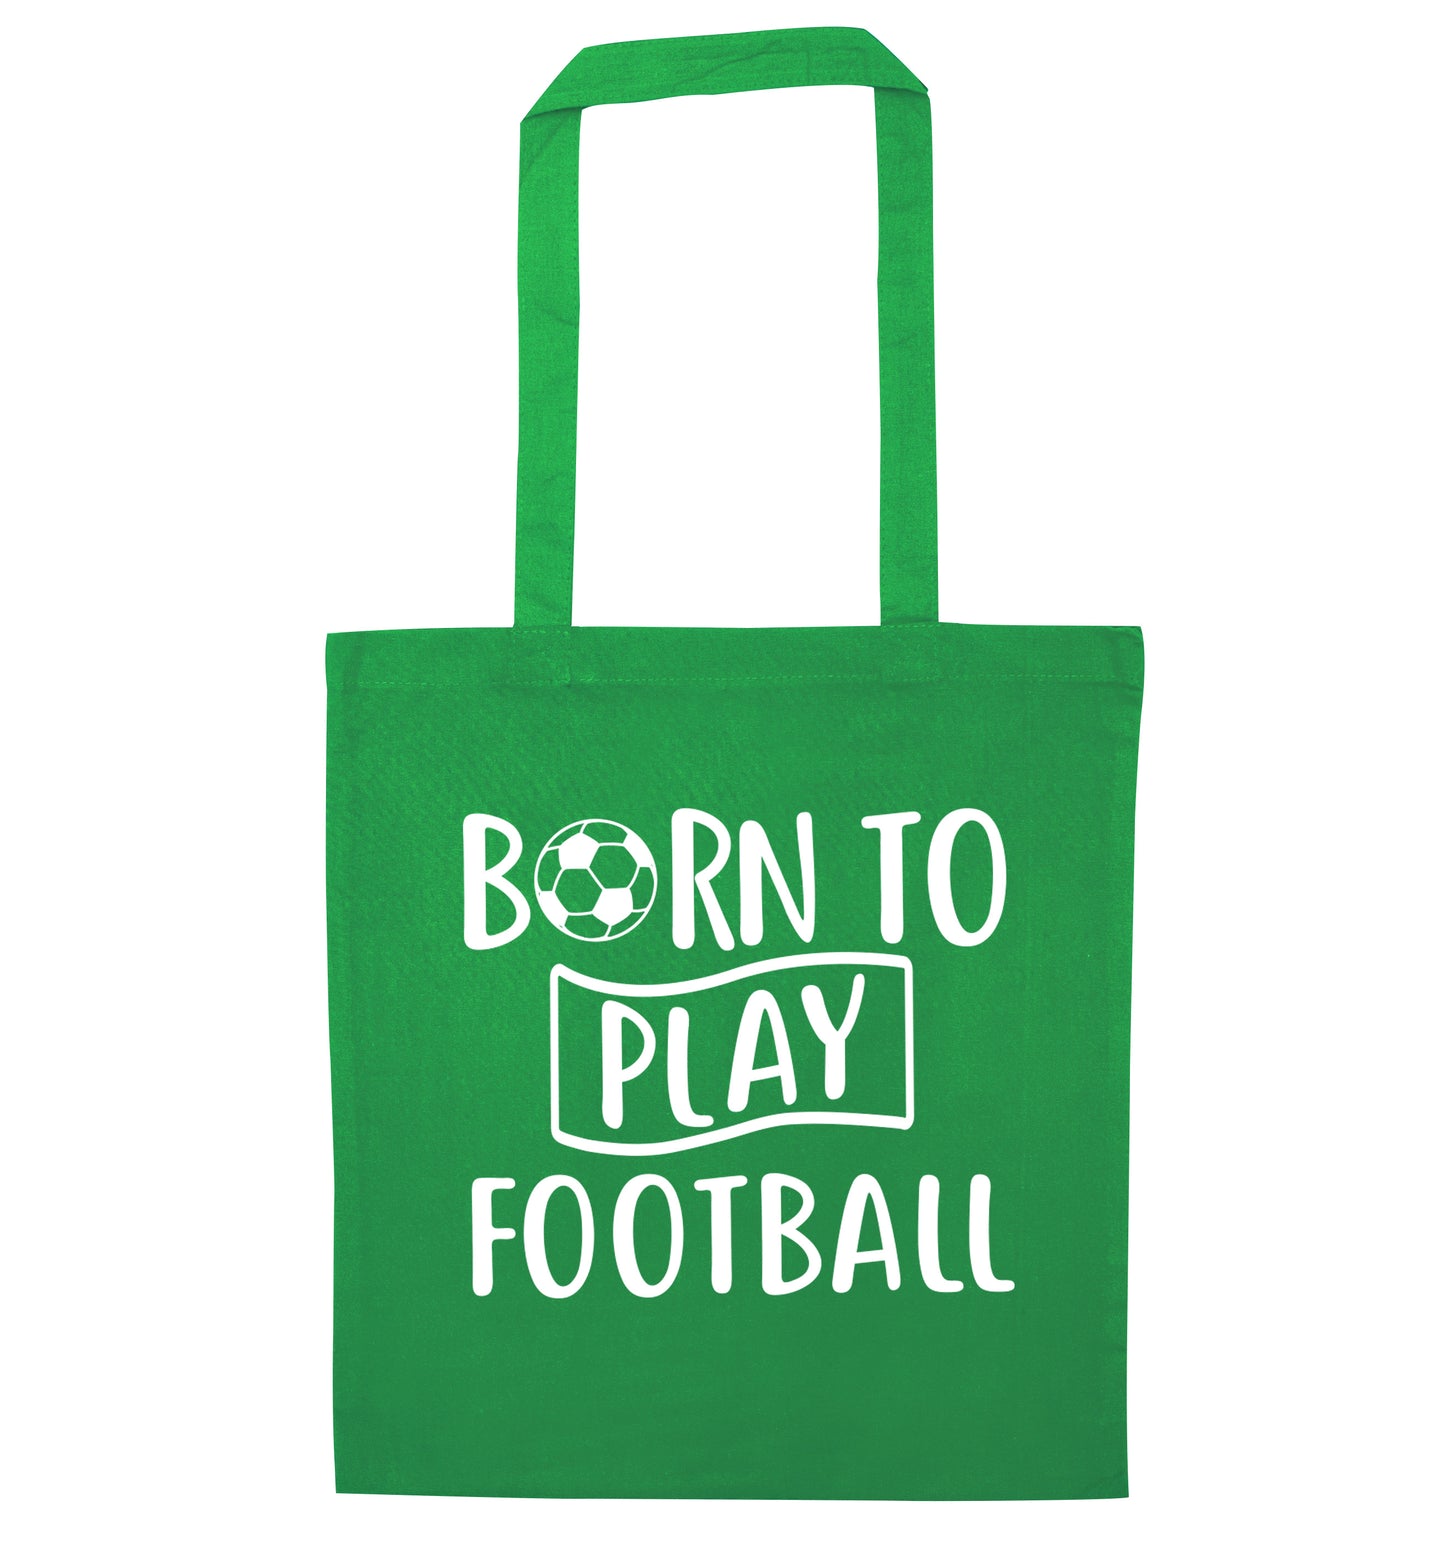 Born to play football green tote bag